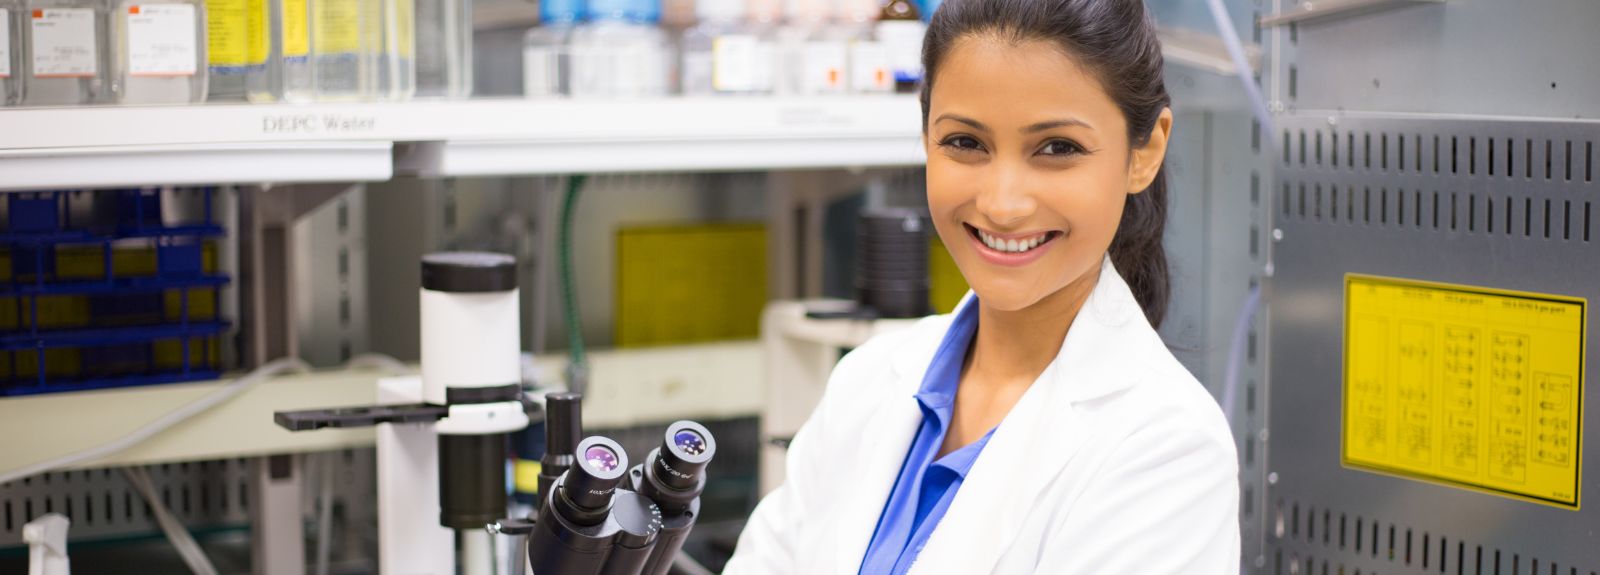 female scientist in lab in a white coat